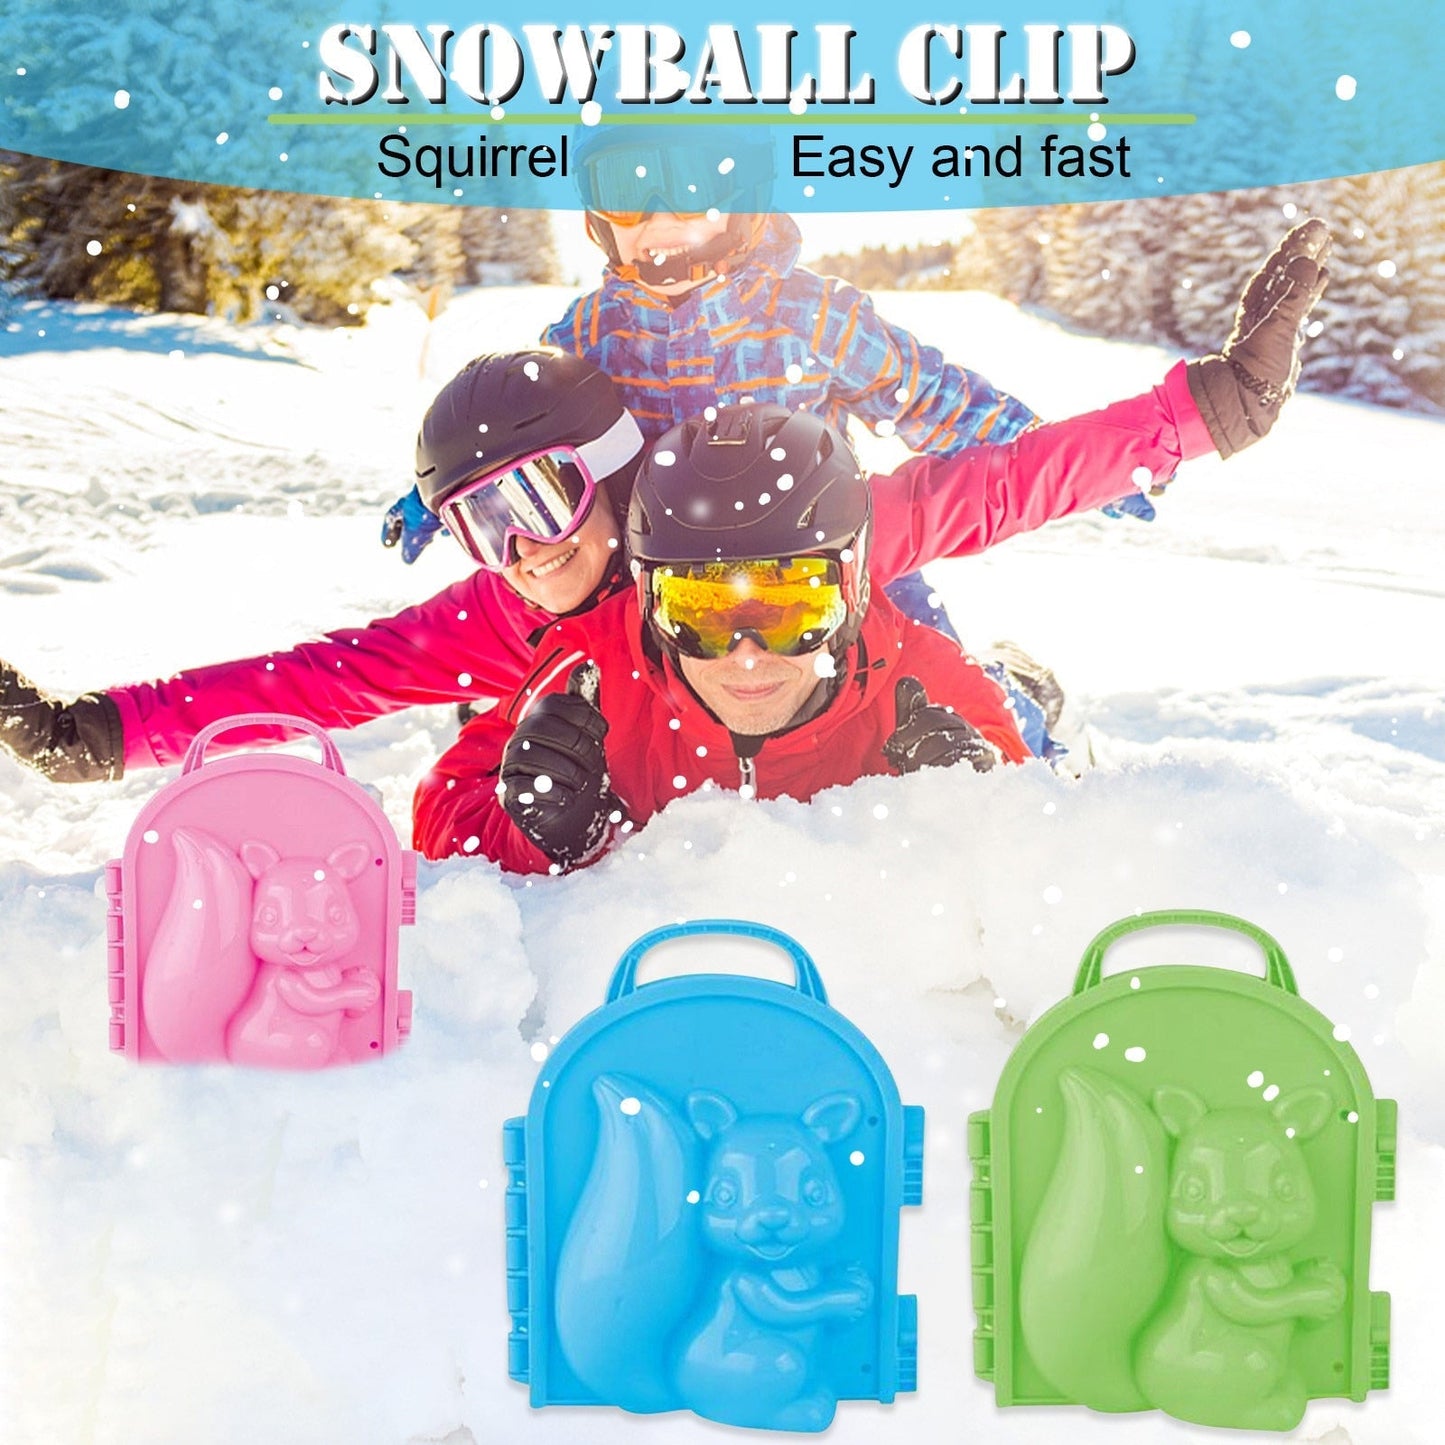 Winter Snow Toys Kit